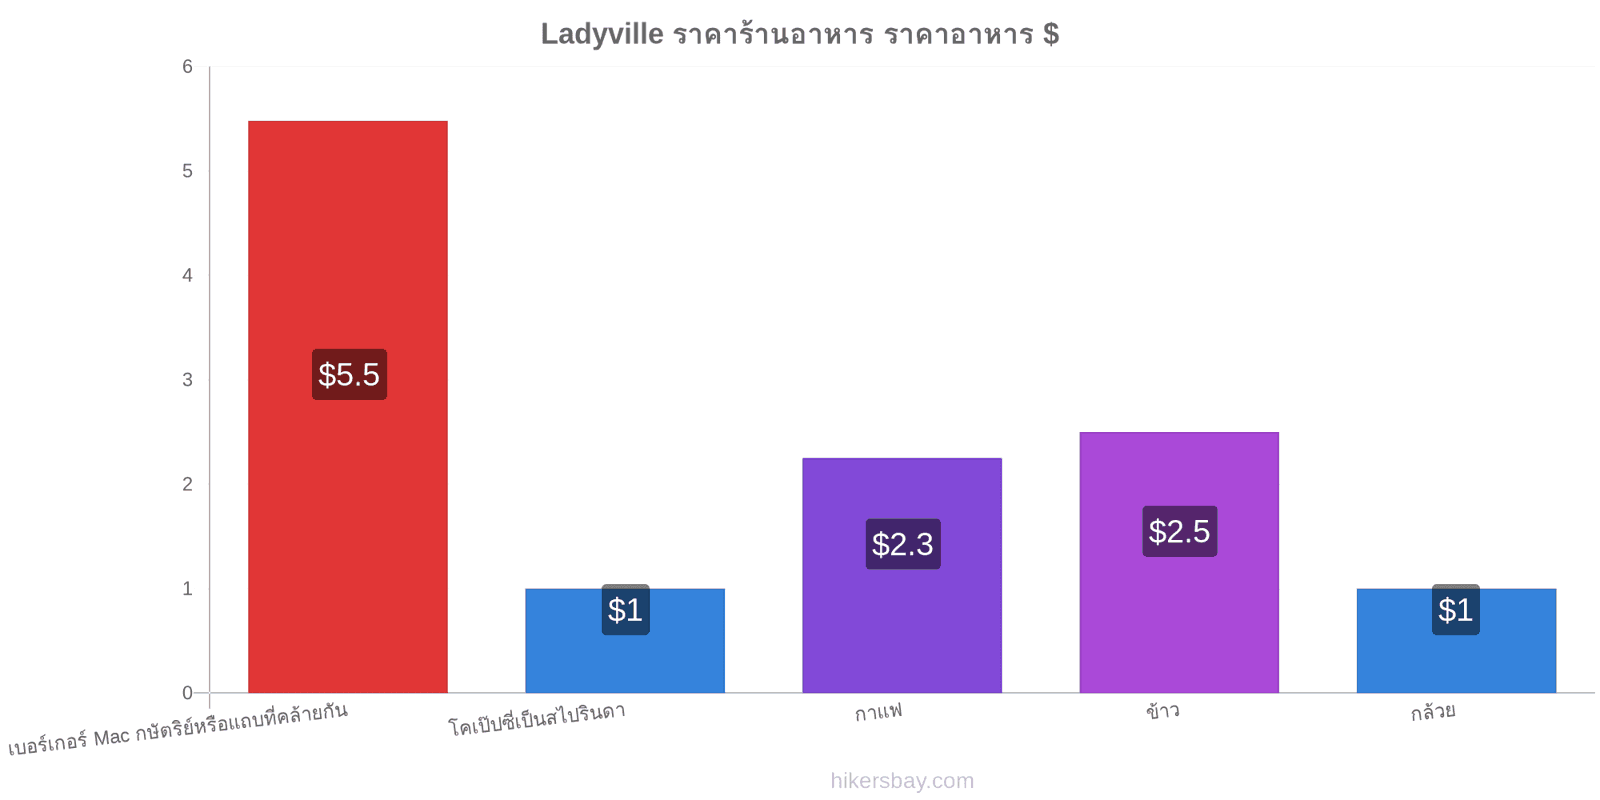 Ladyville การเปลี่ยนแปลงราคา hikersbay.com